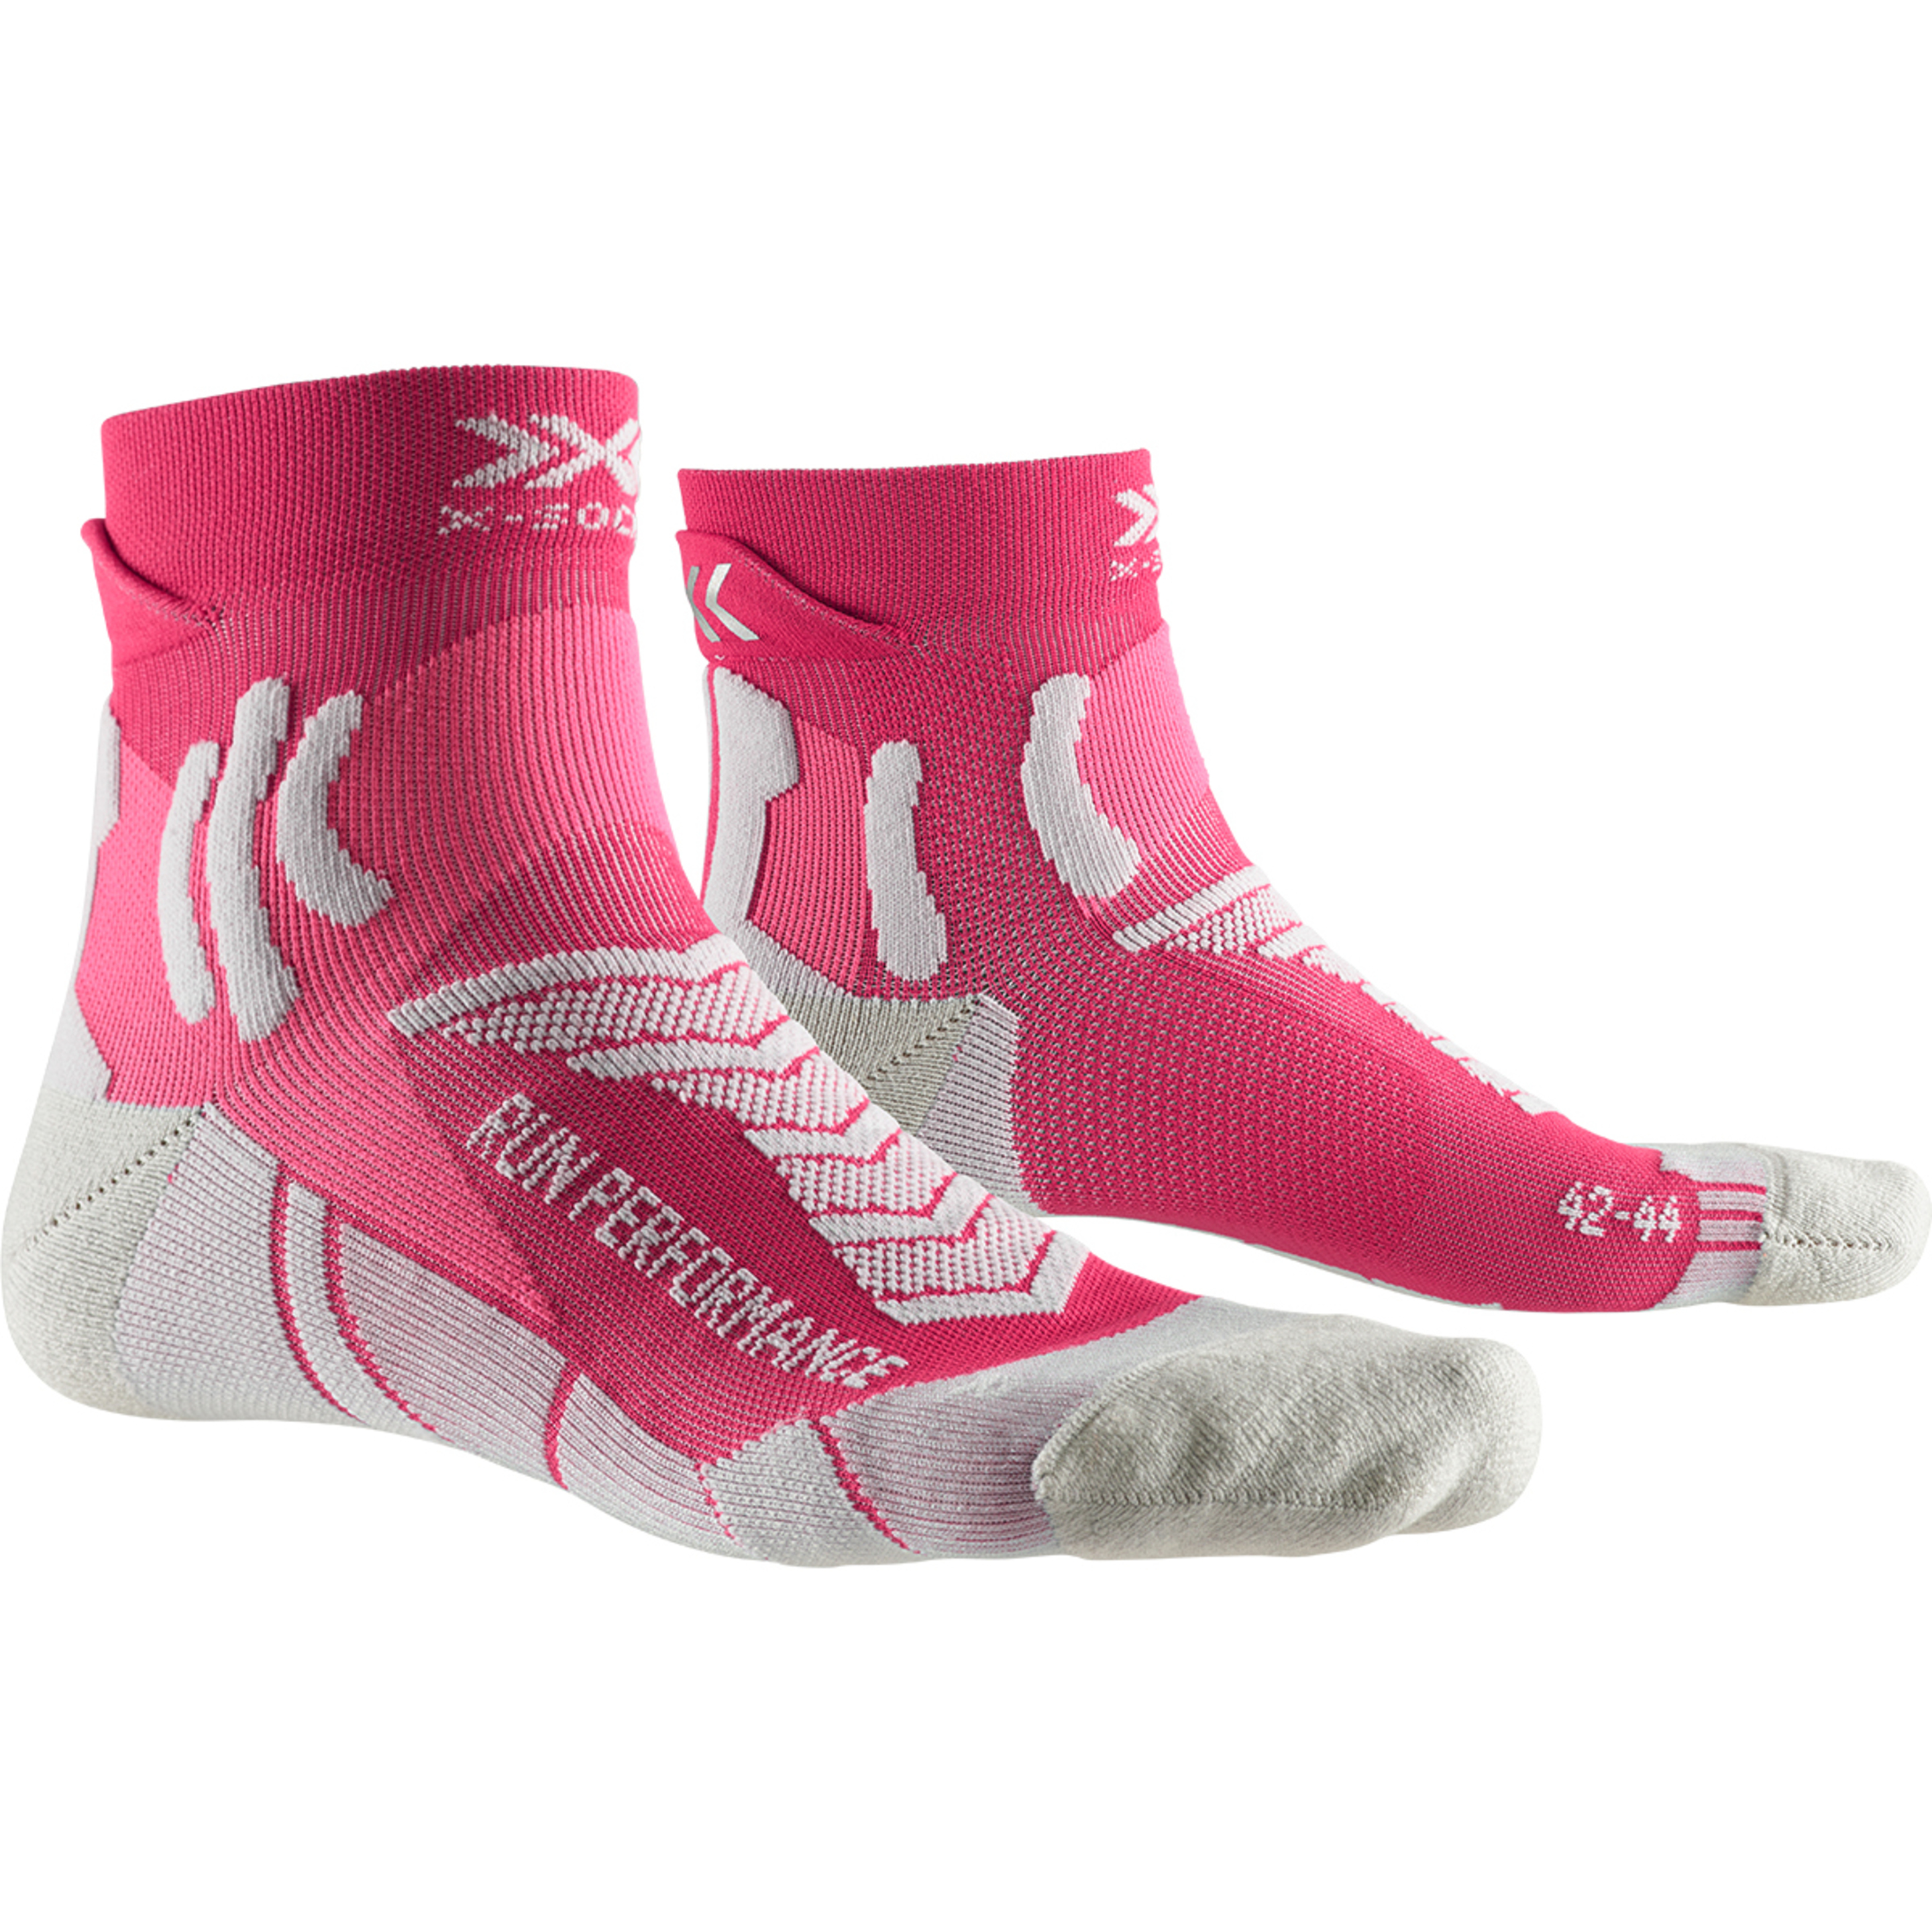 Calcetin Run Performance Mujer  X-socks - Rosa  MKP